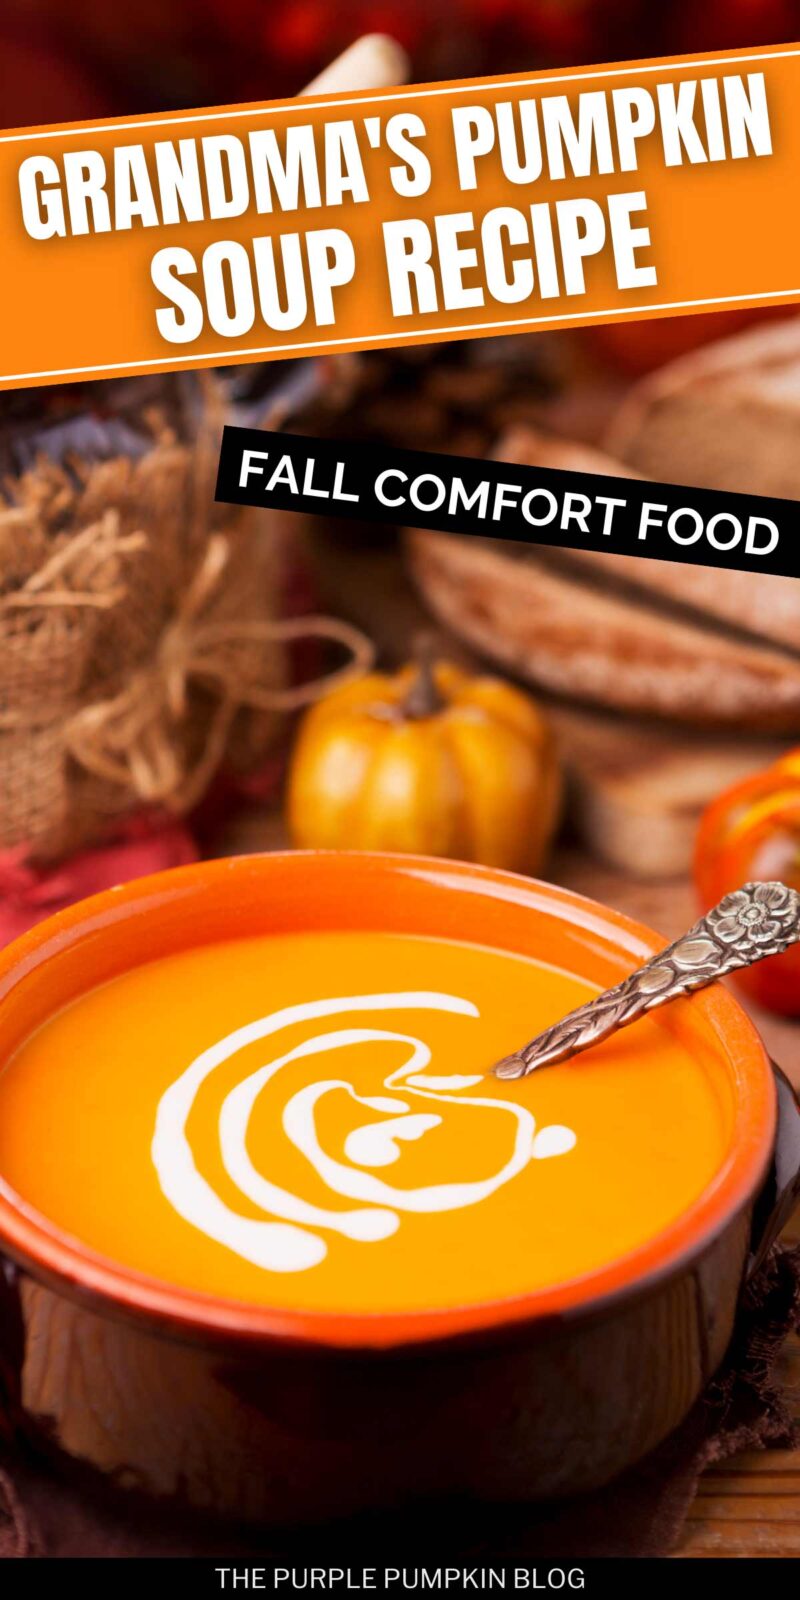 Grandma's Pumpkin Soup Recipe - Fall Comfort Food